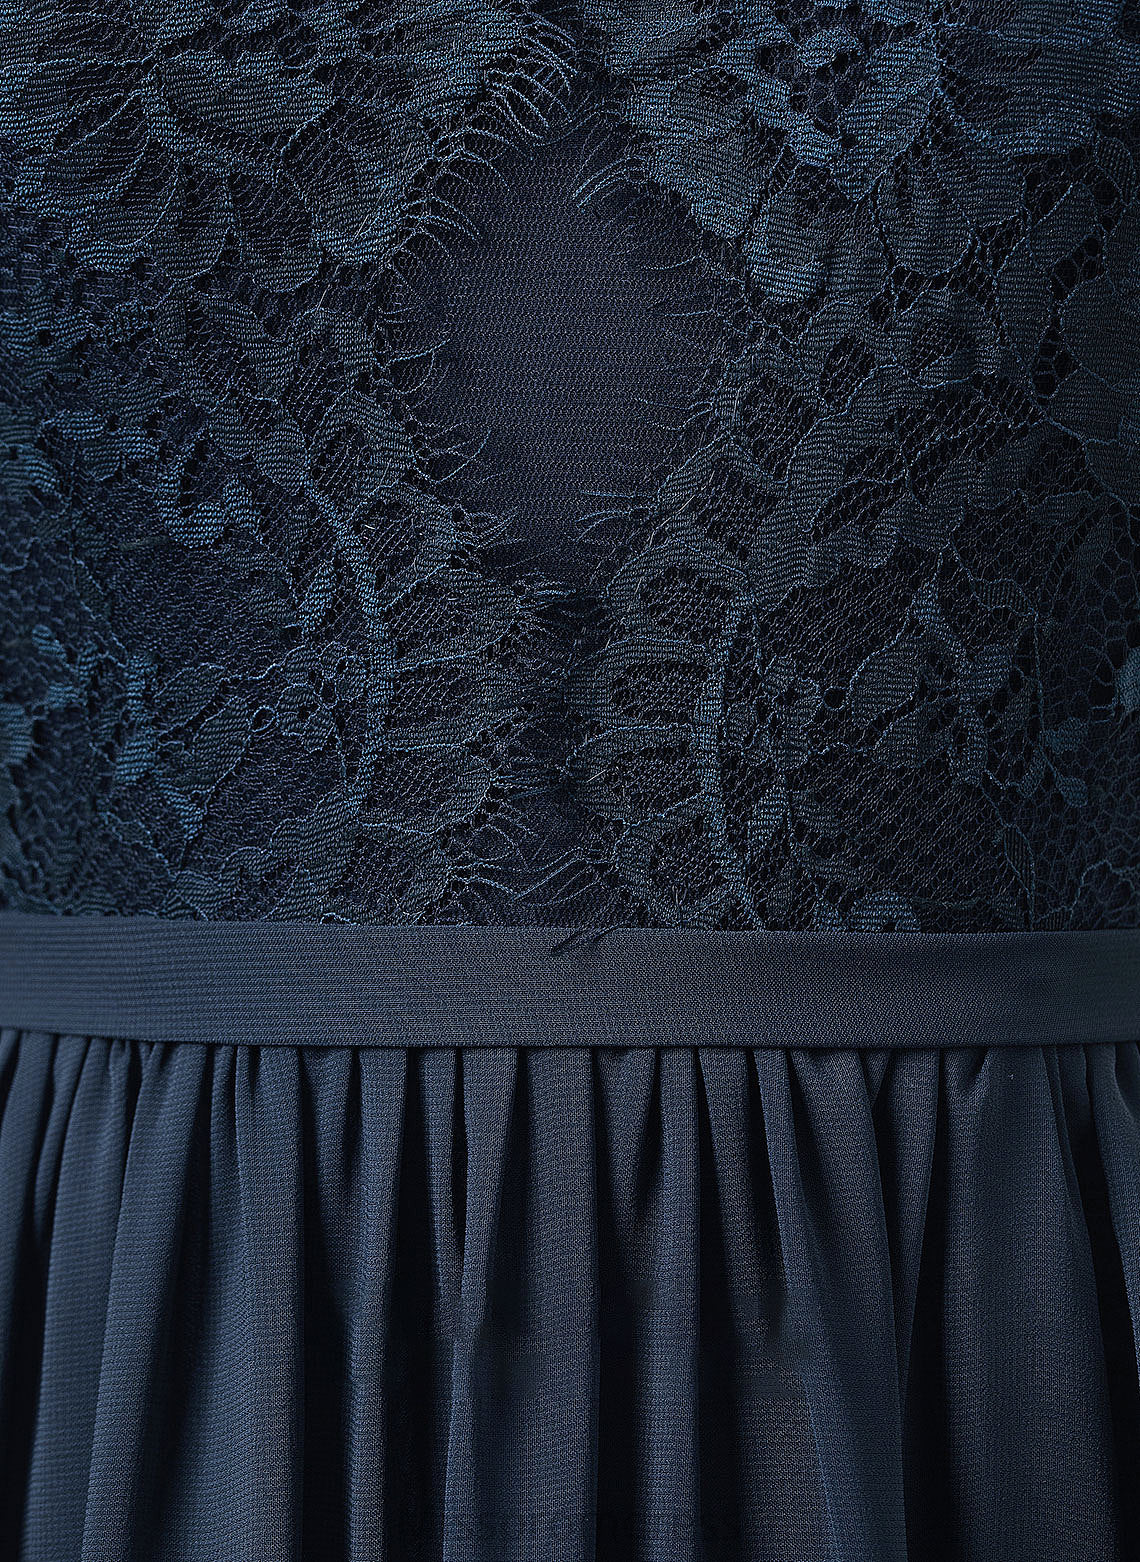 Neckline SplitFront Floor-Length Silhouette A-Line Length ScoopNeck Fabric Embellishment Rylie Natural Waist Floor Length Bridesmaid Dresses